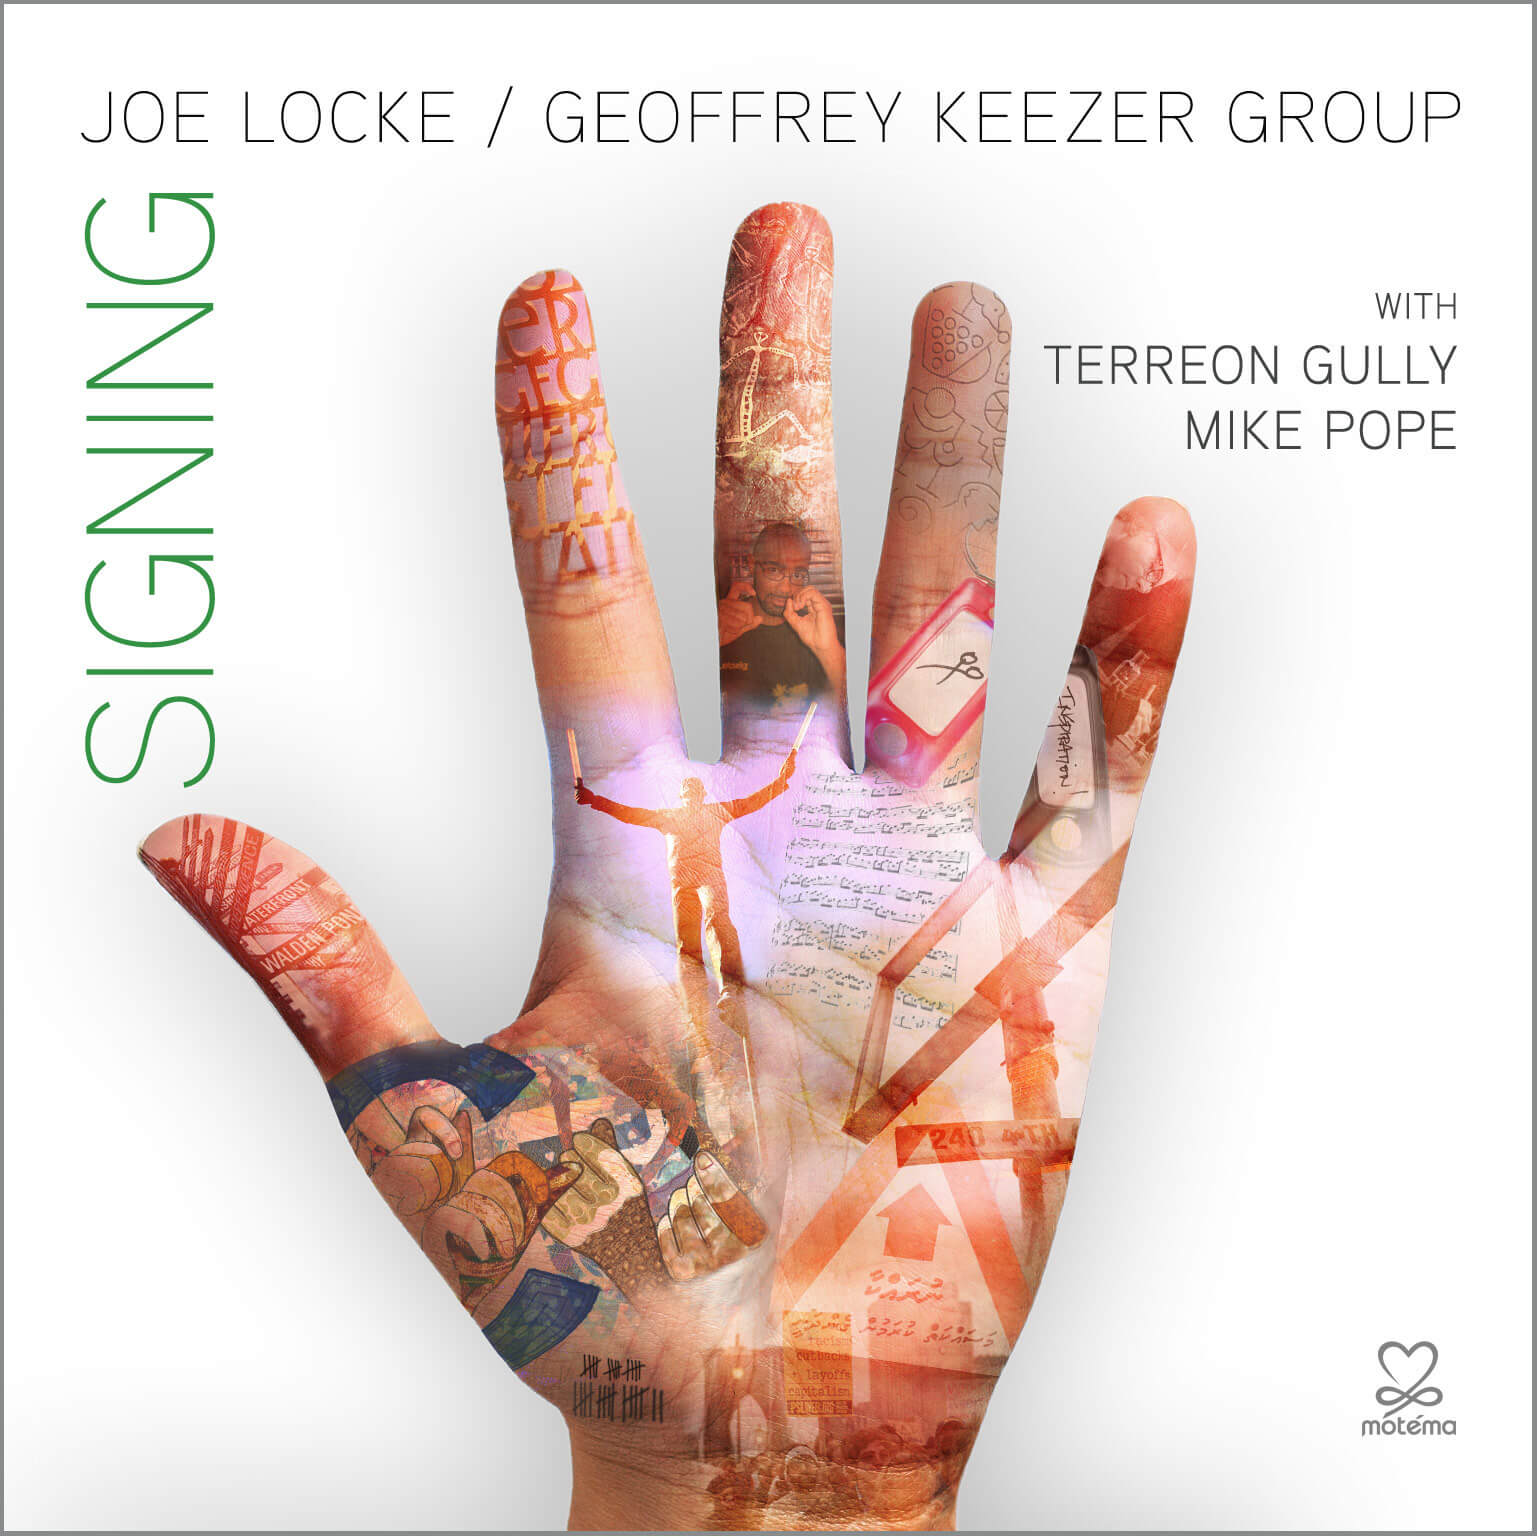 Joe Locke / Geoffrey Keezer Group – SIGNING